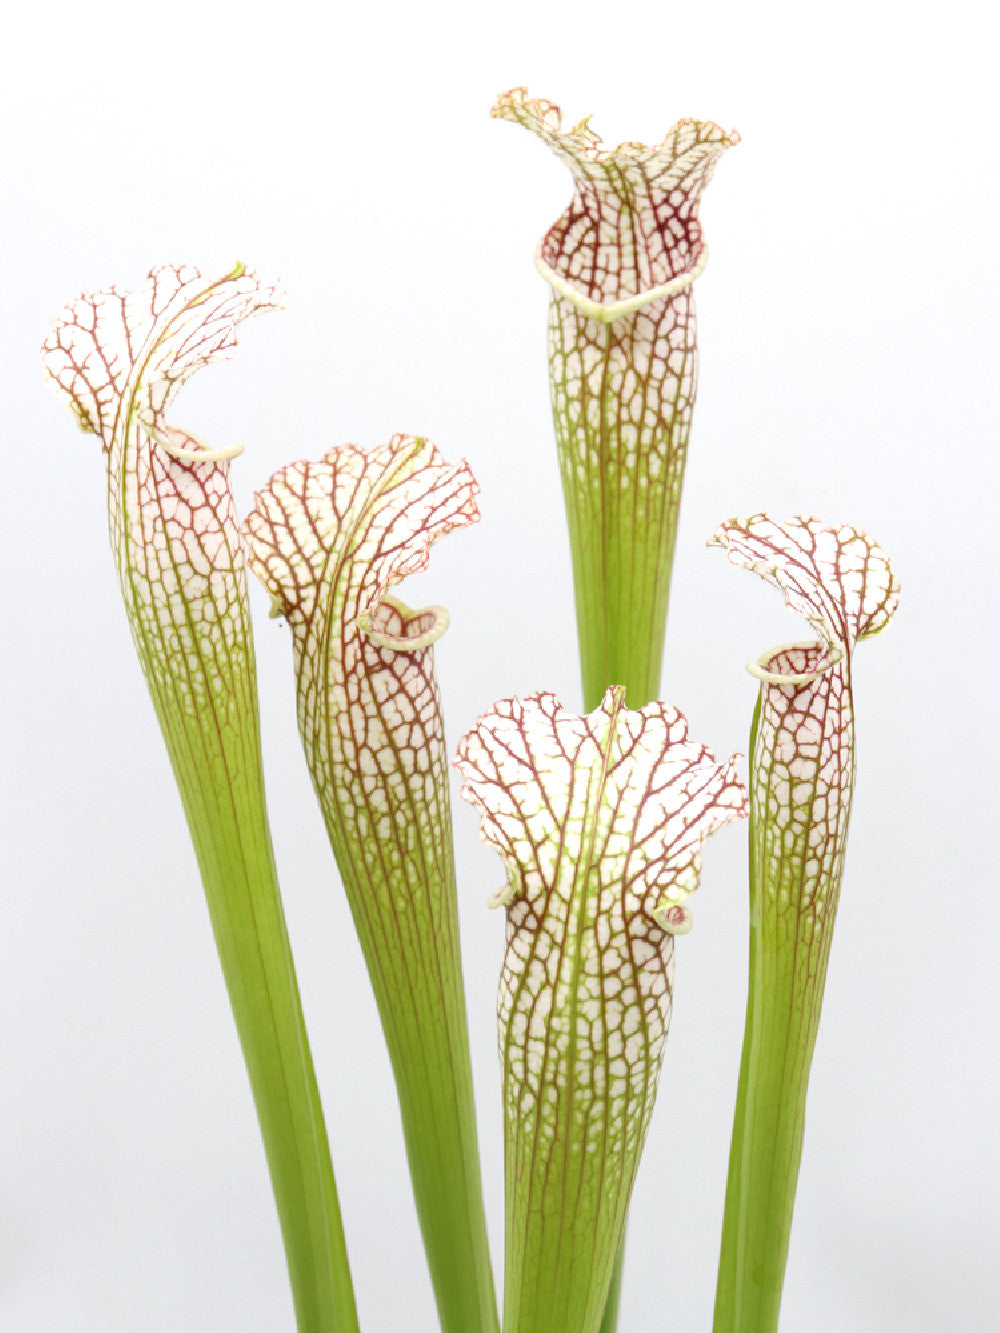 S.x leucophylla var.alba x rubra heterophylla